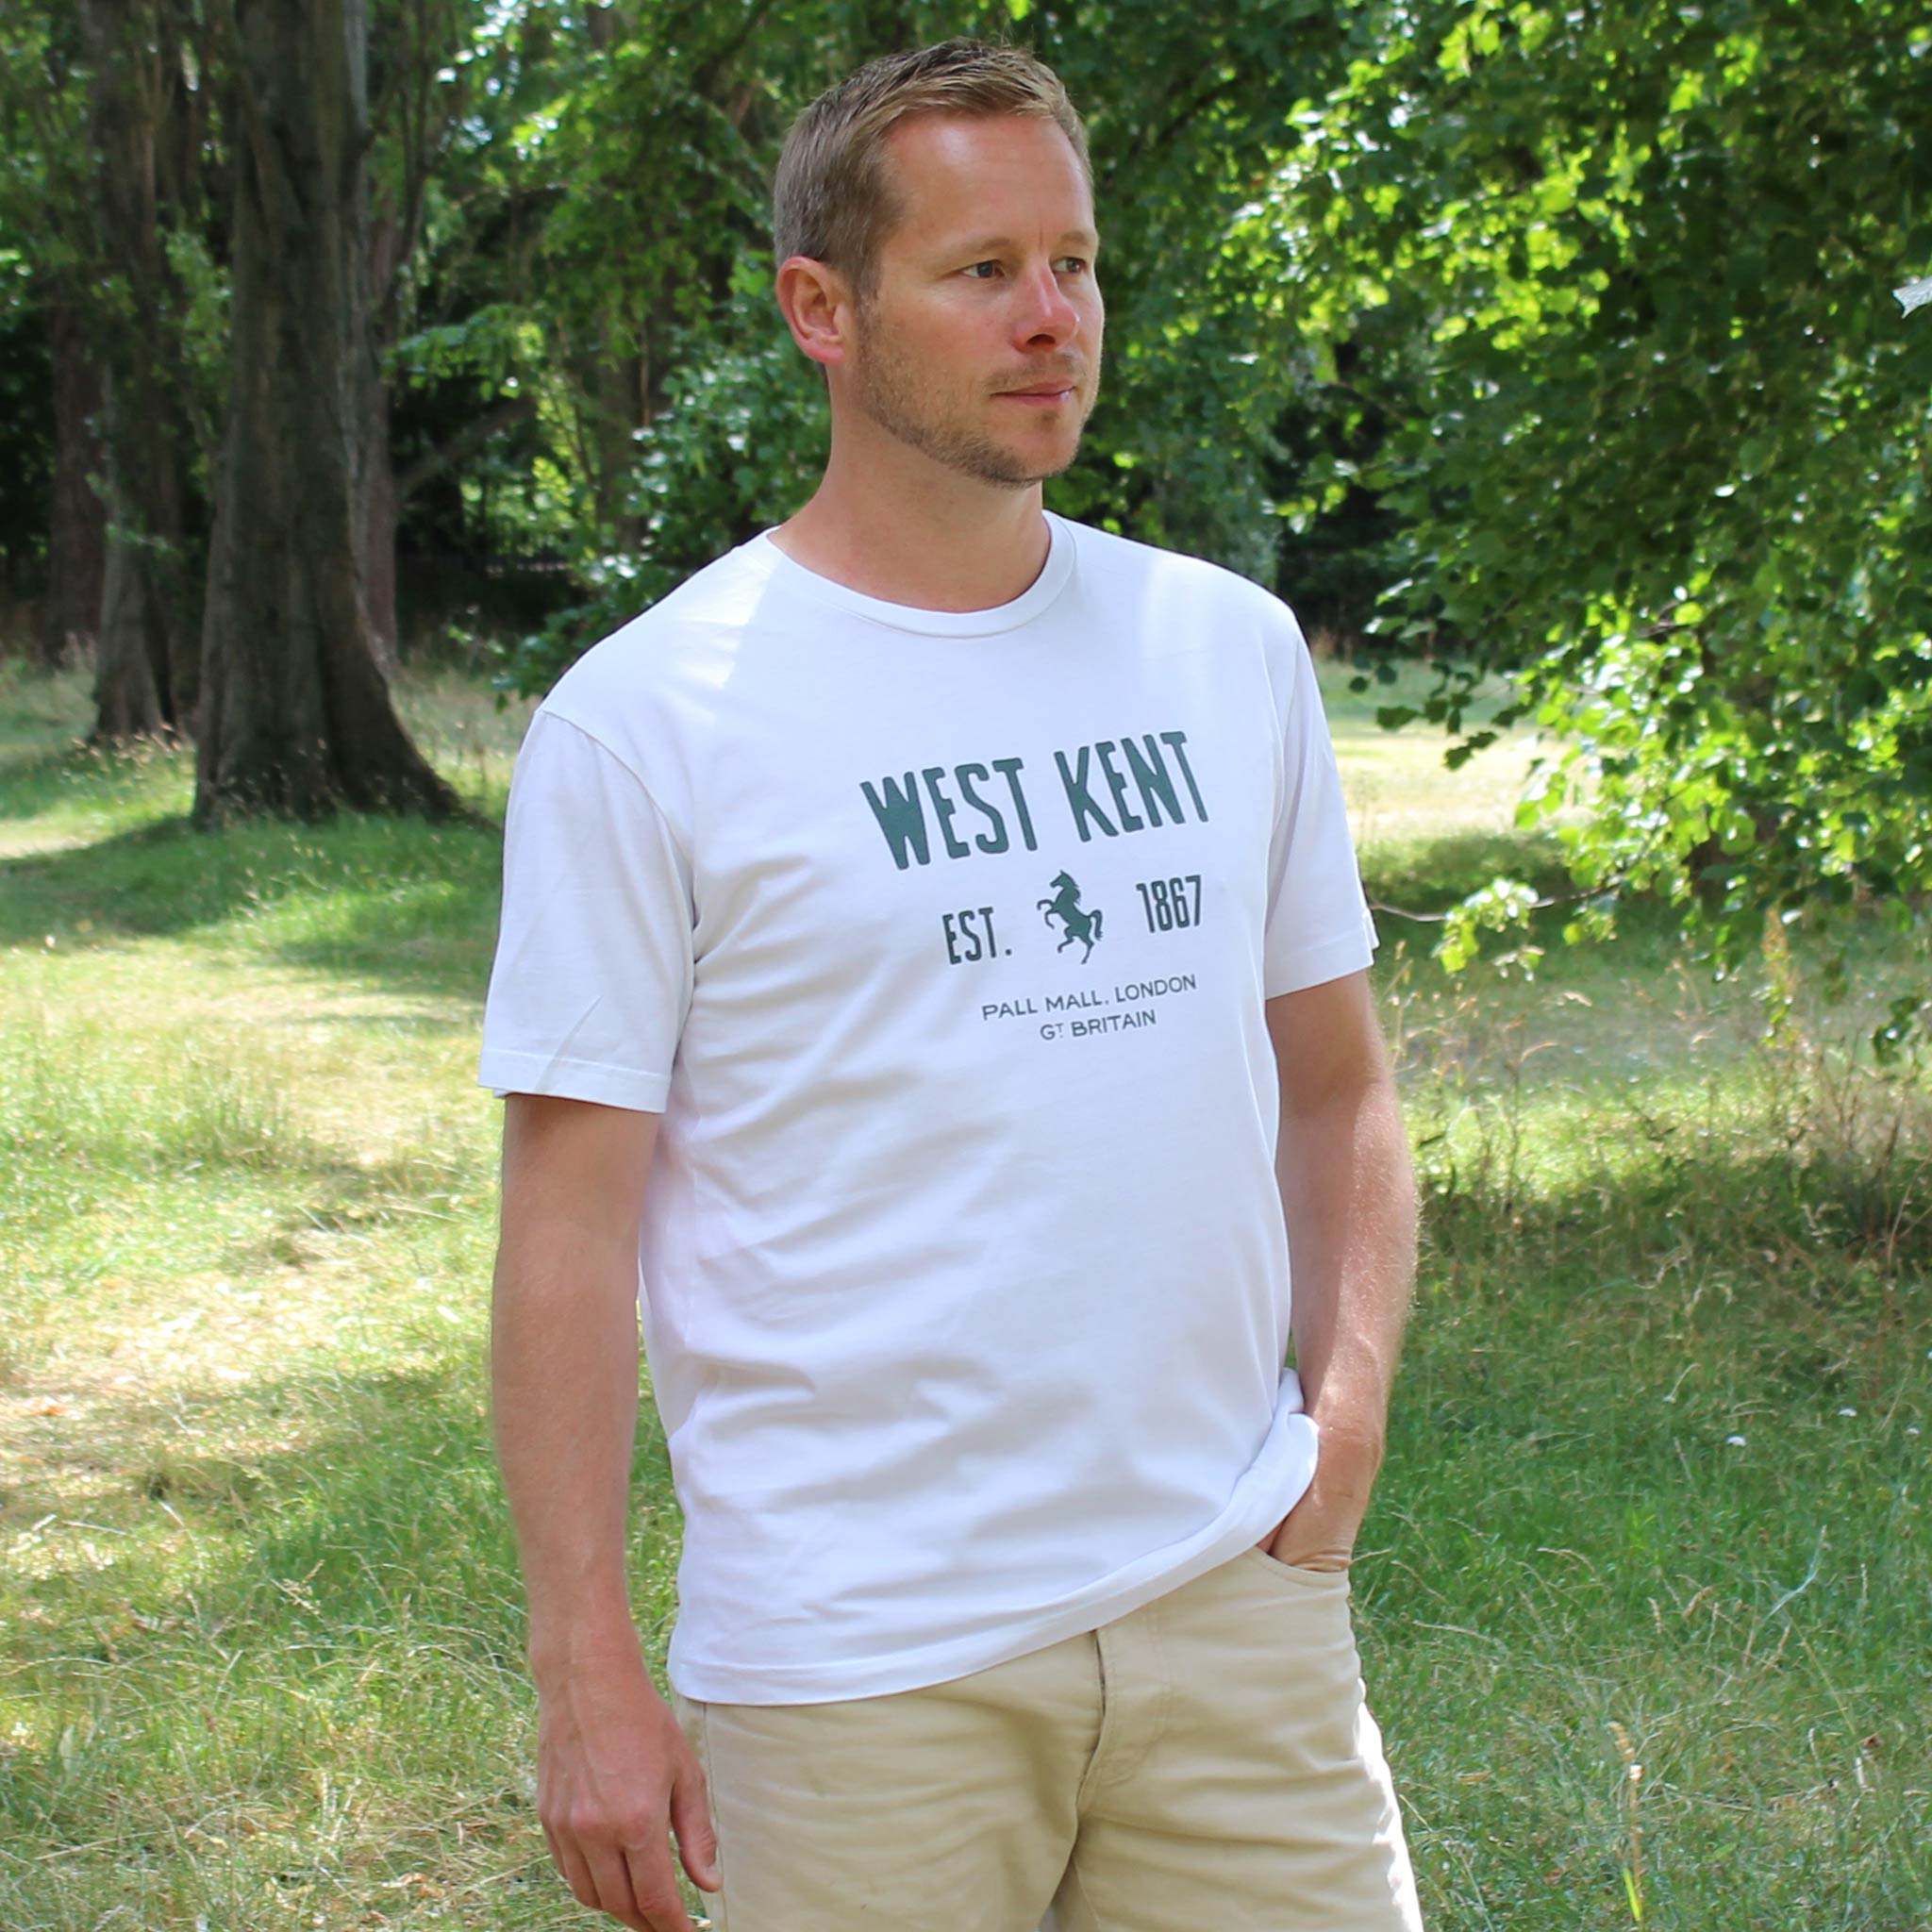 West Kent White T-shirt model